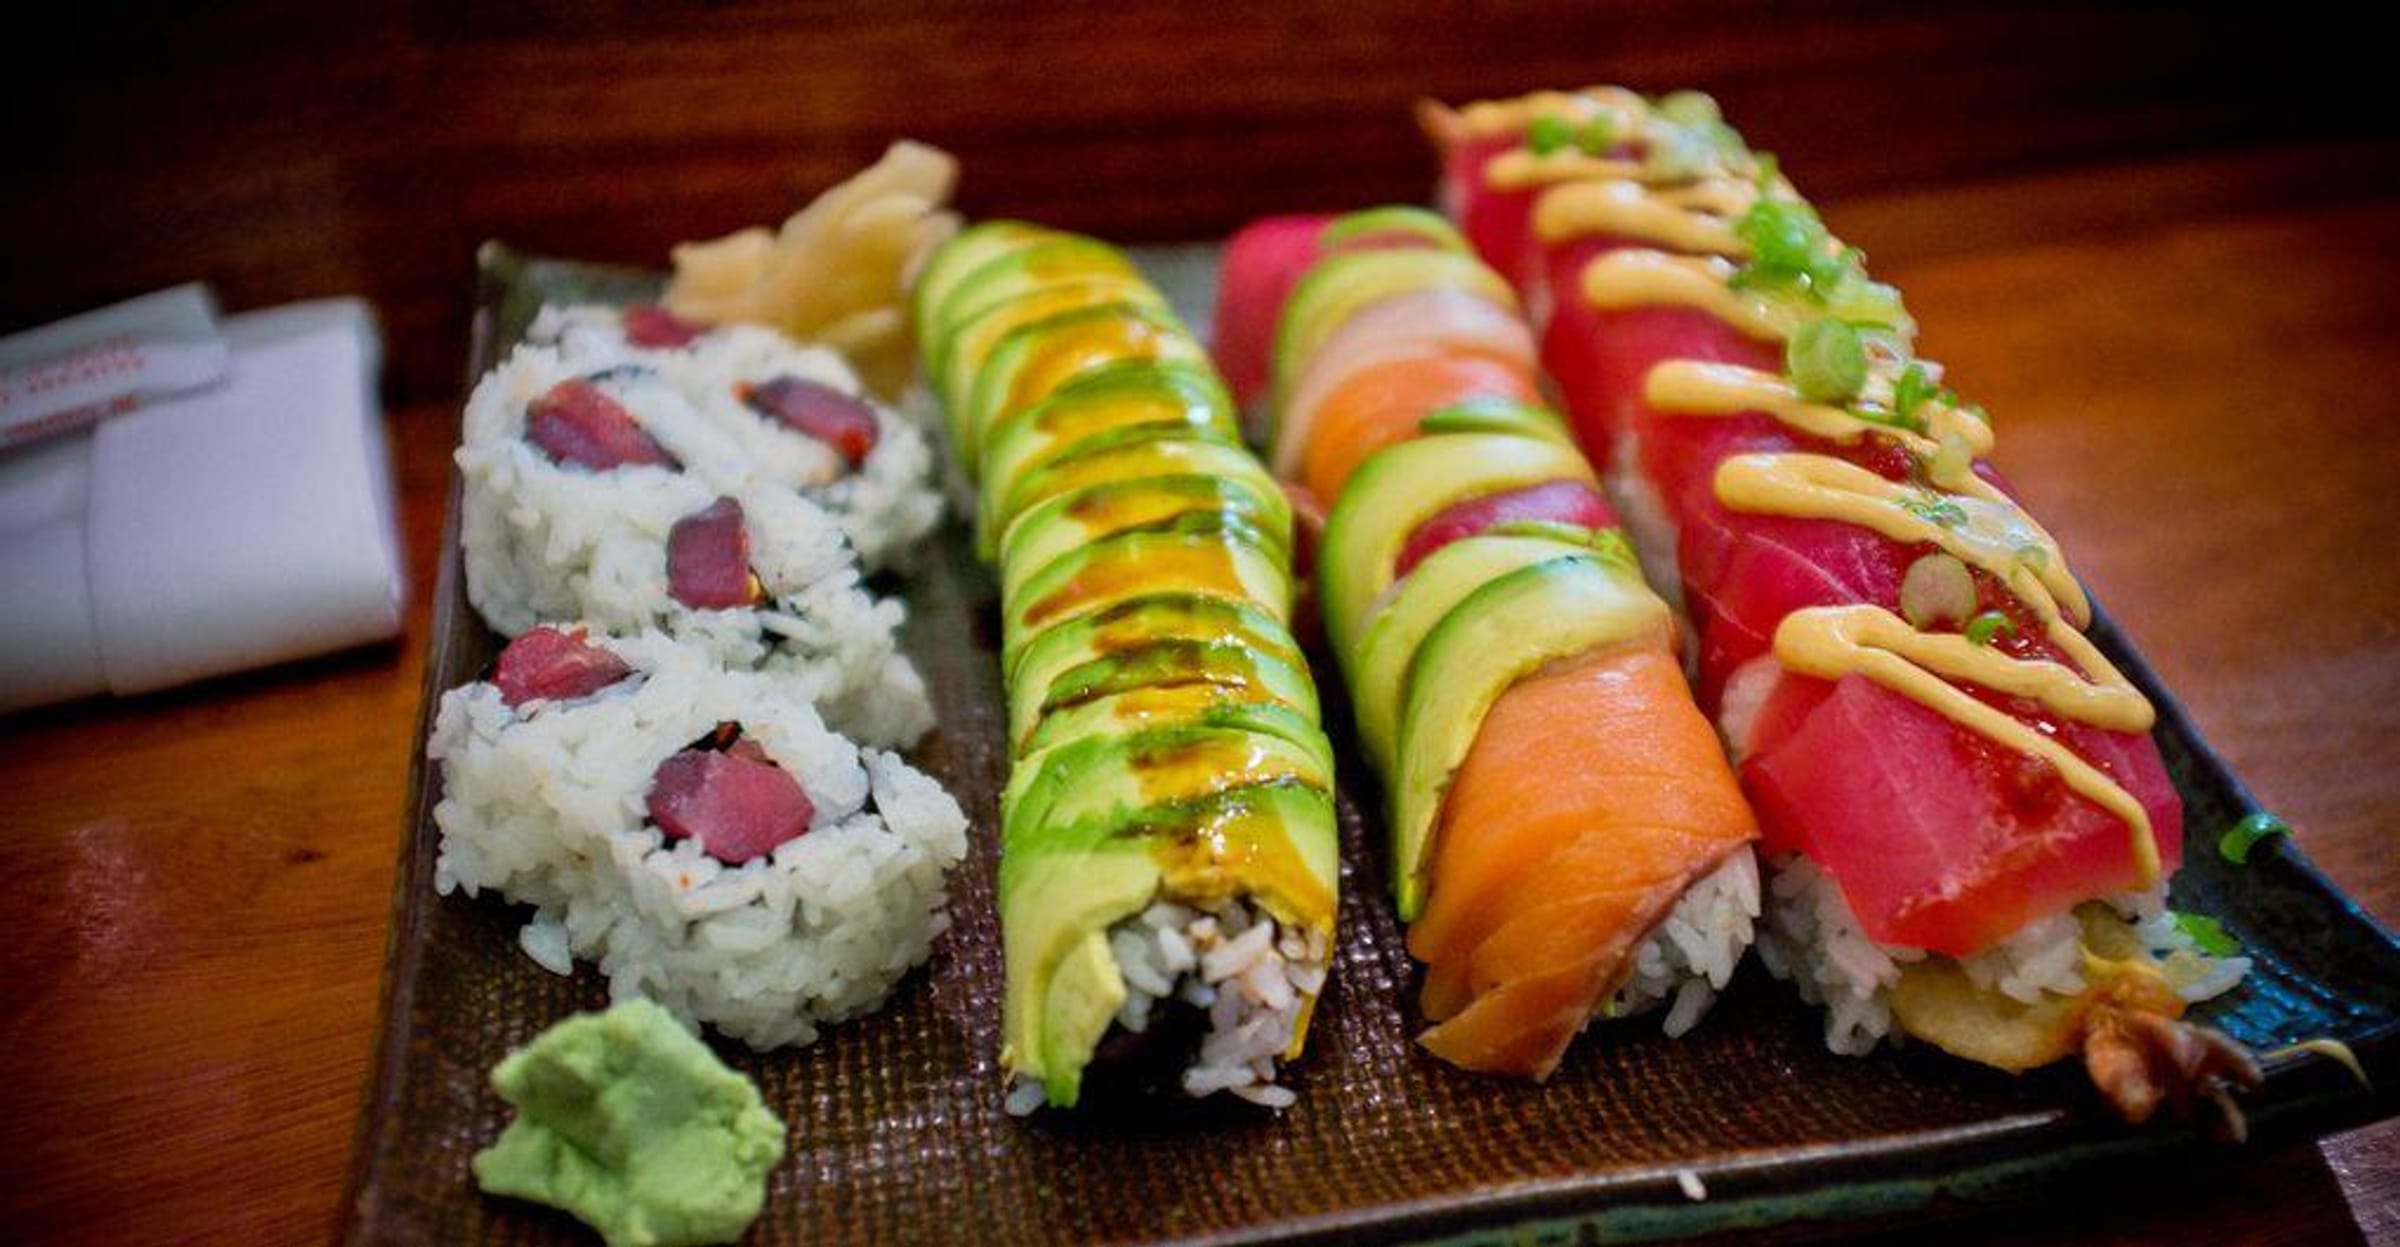 https://imgix.ranker.com/list_img_v2/16875/1756875/original/best-types-of-sushi-rolls-u2?fit=crop&fm=pjpg&q=80&dpr=2&w=1200&h=720